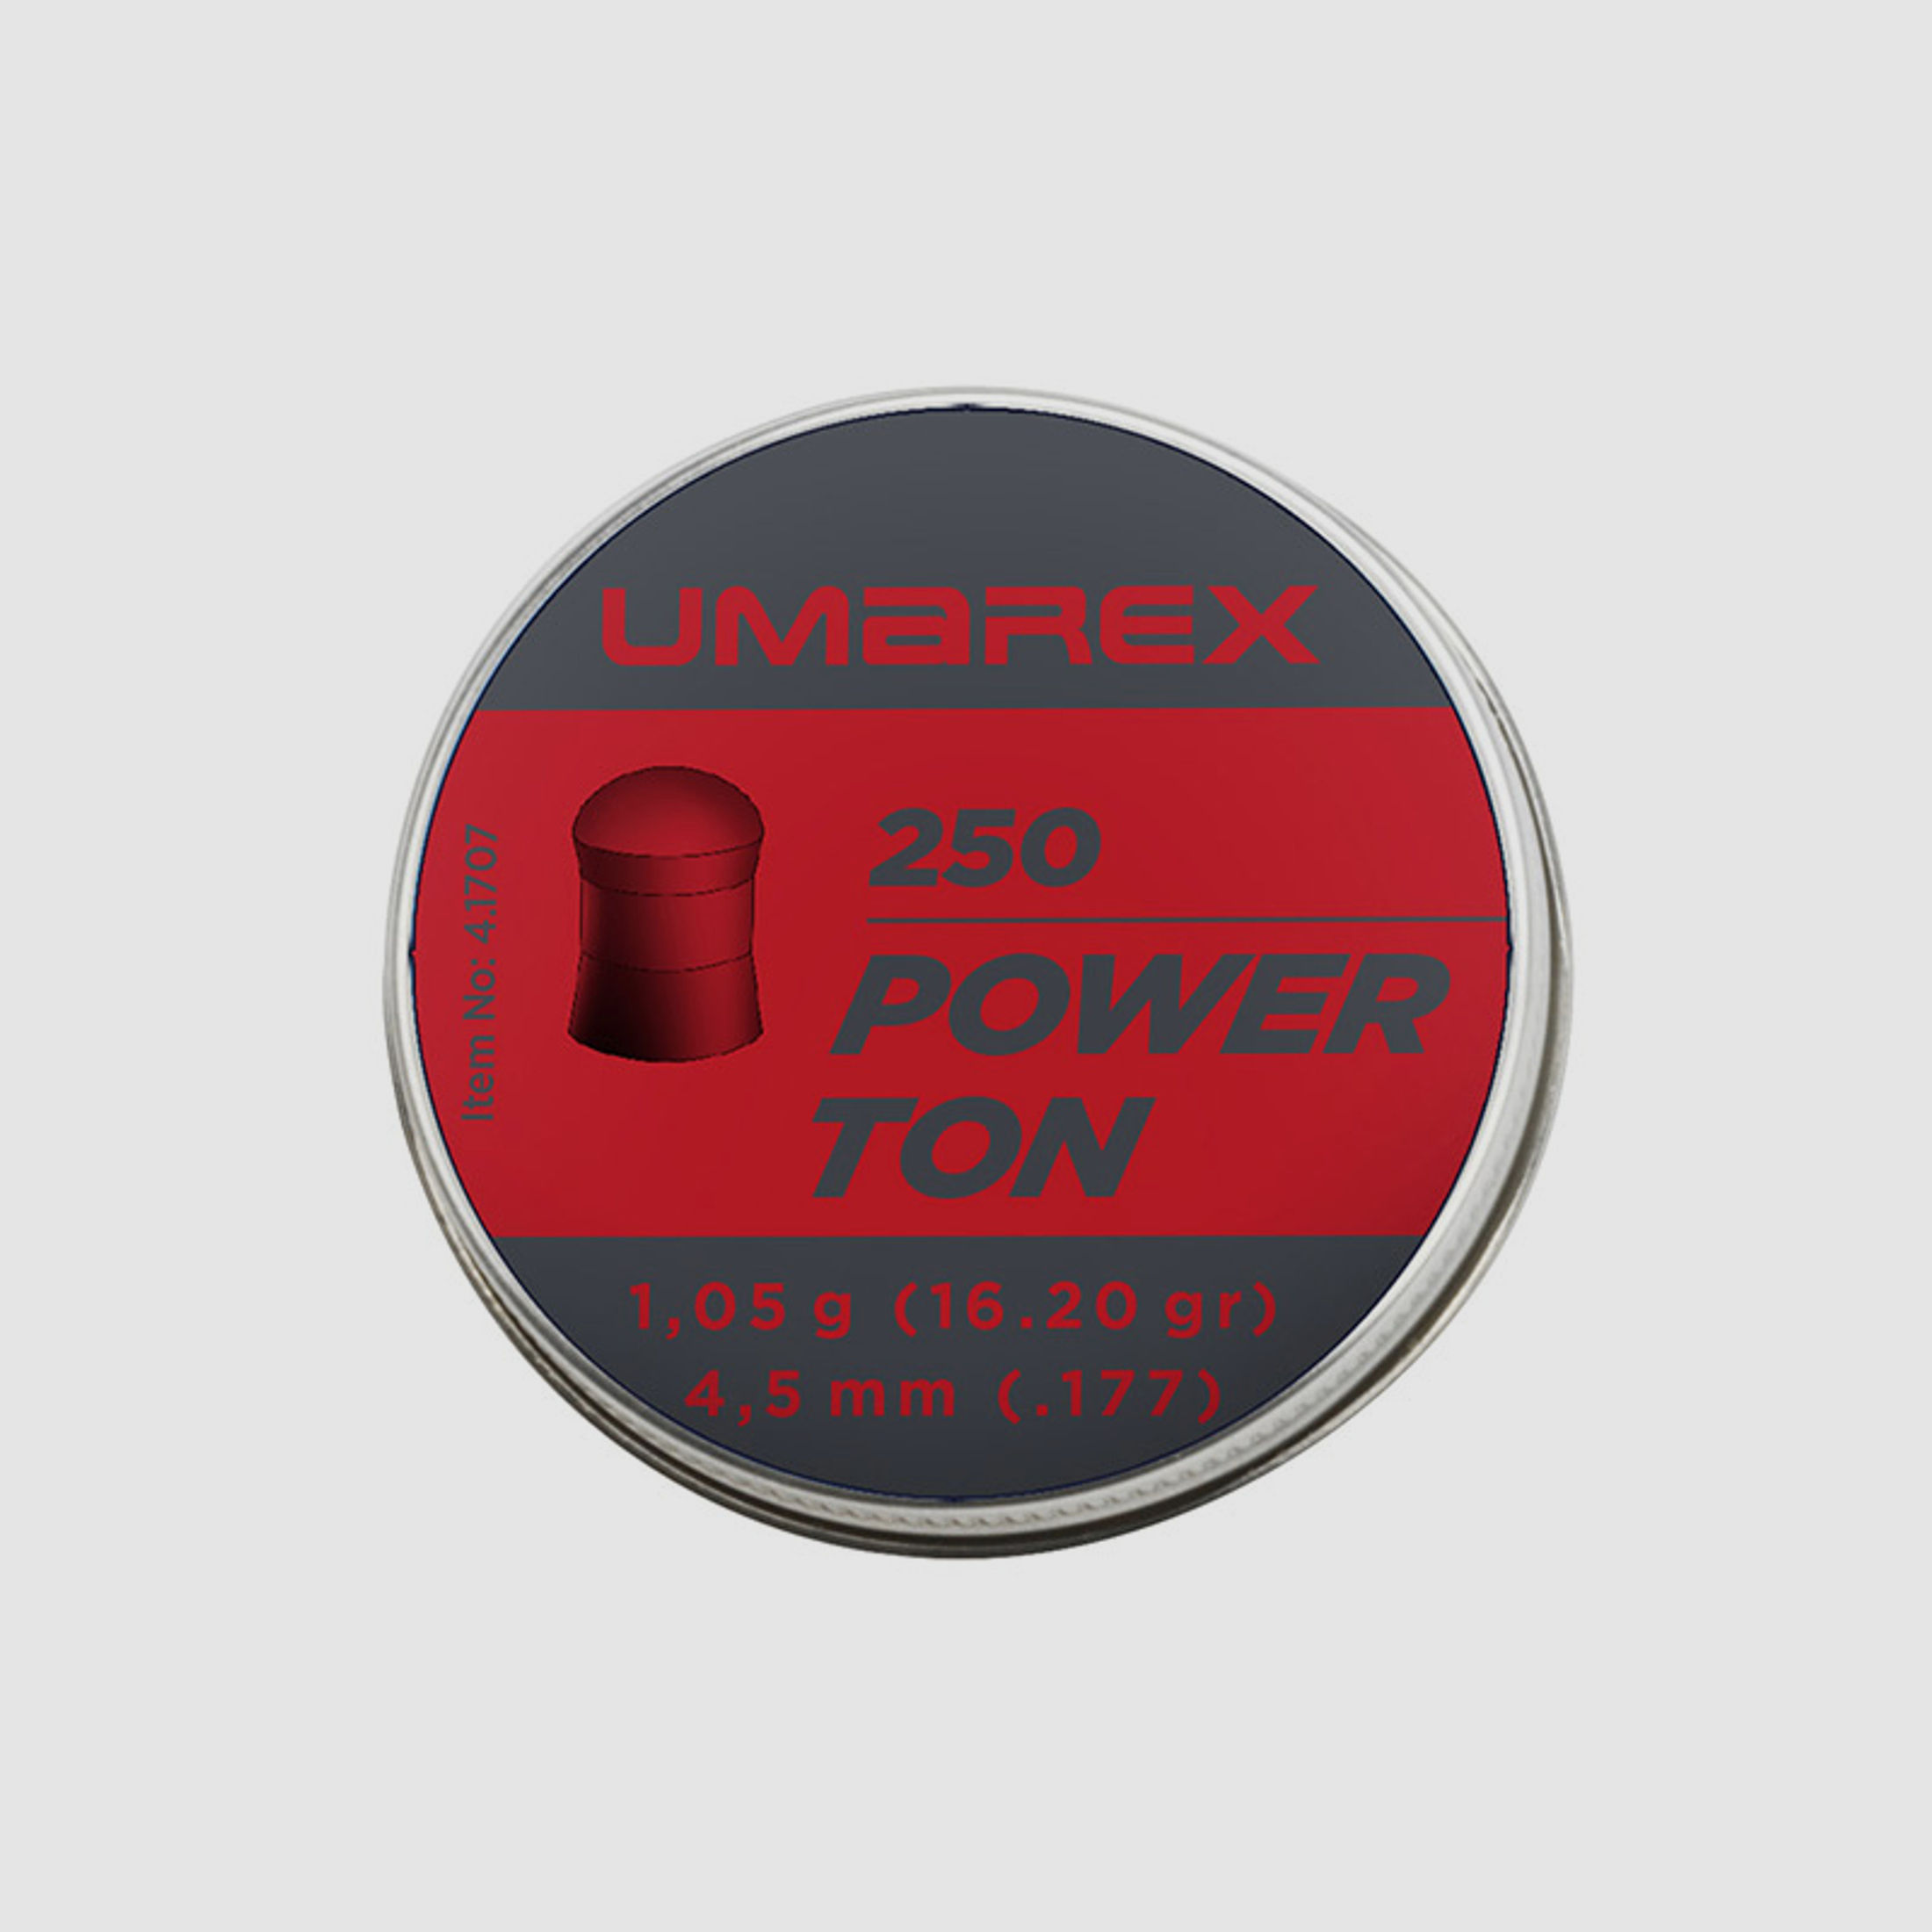 Rundkopf Diabolos Umarex Power Ton Kaliber 4,5 mm 1,05 g glatt 250 StĂĽck